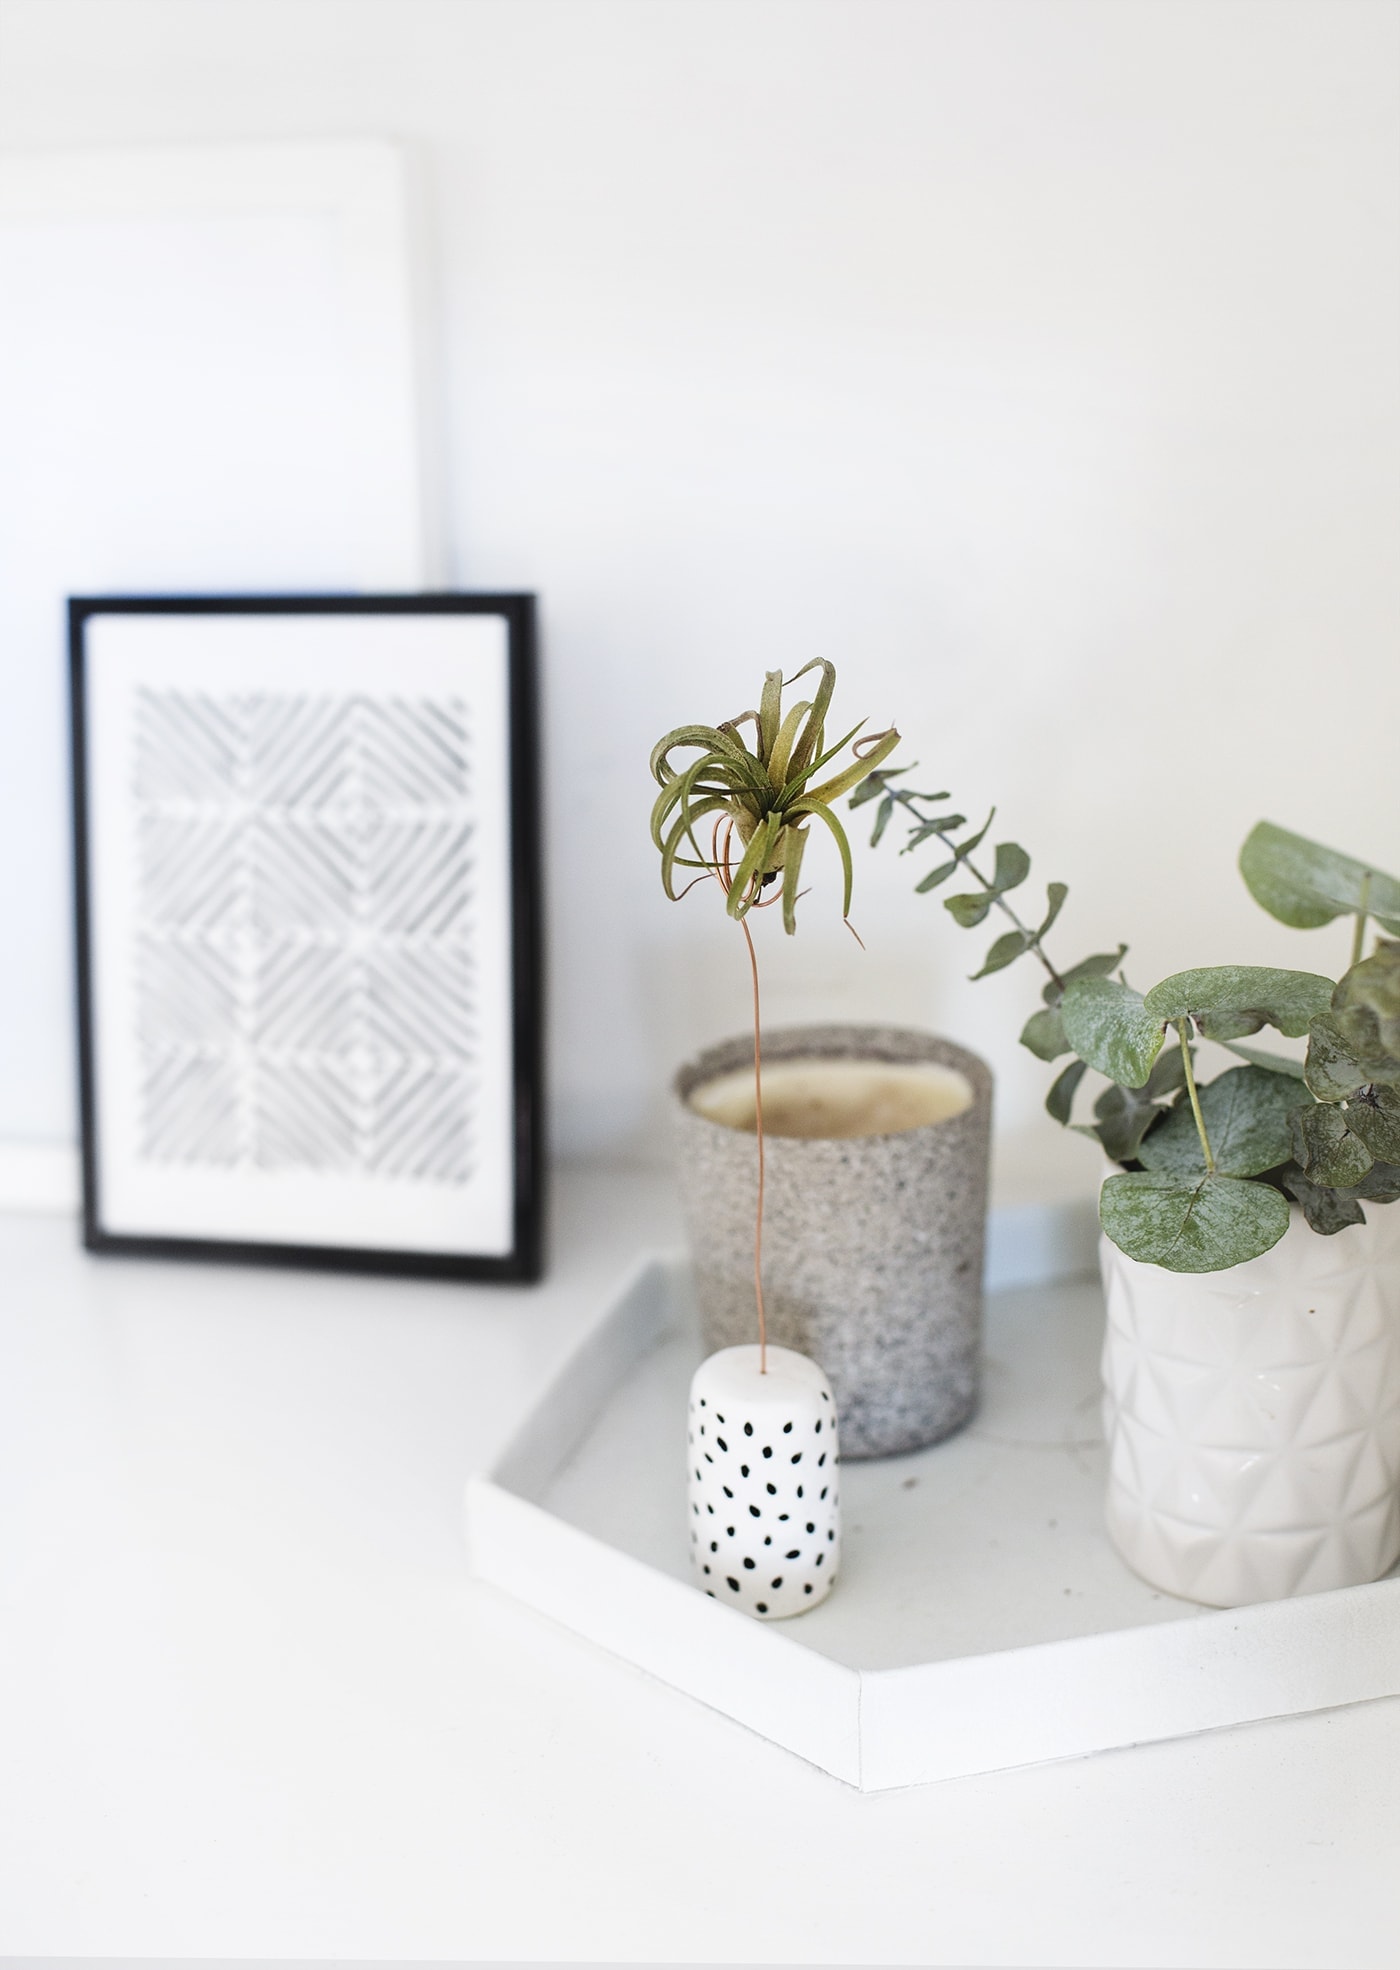 clay air planter holders | easy DIY tutorial | house plants